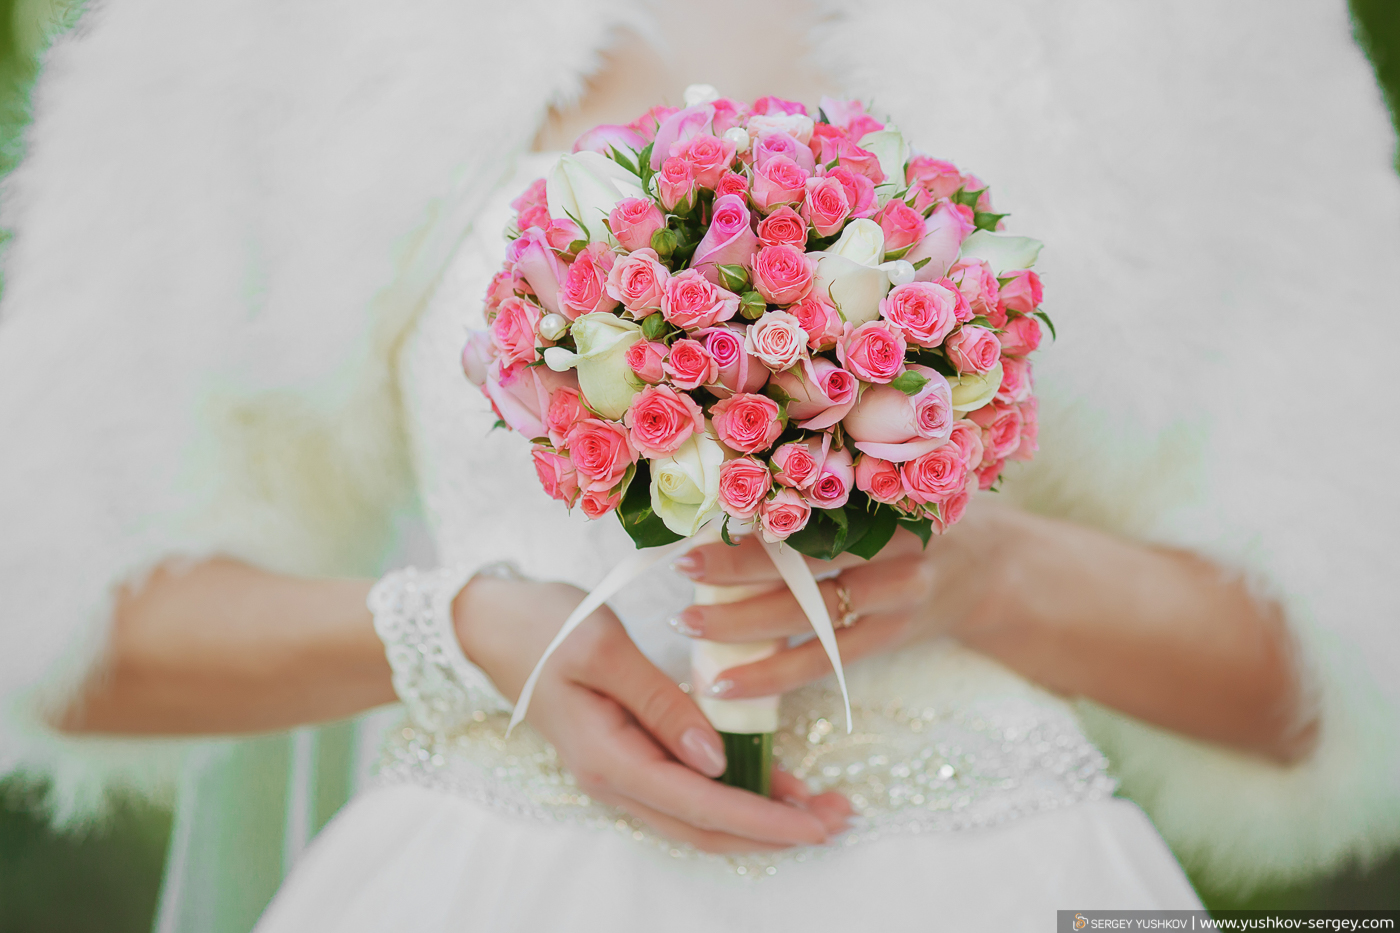 Bouquets of our brides